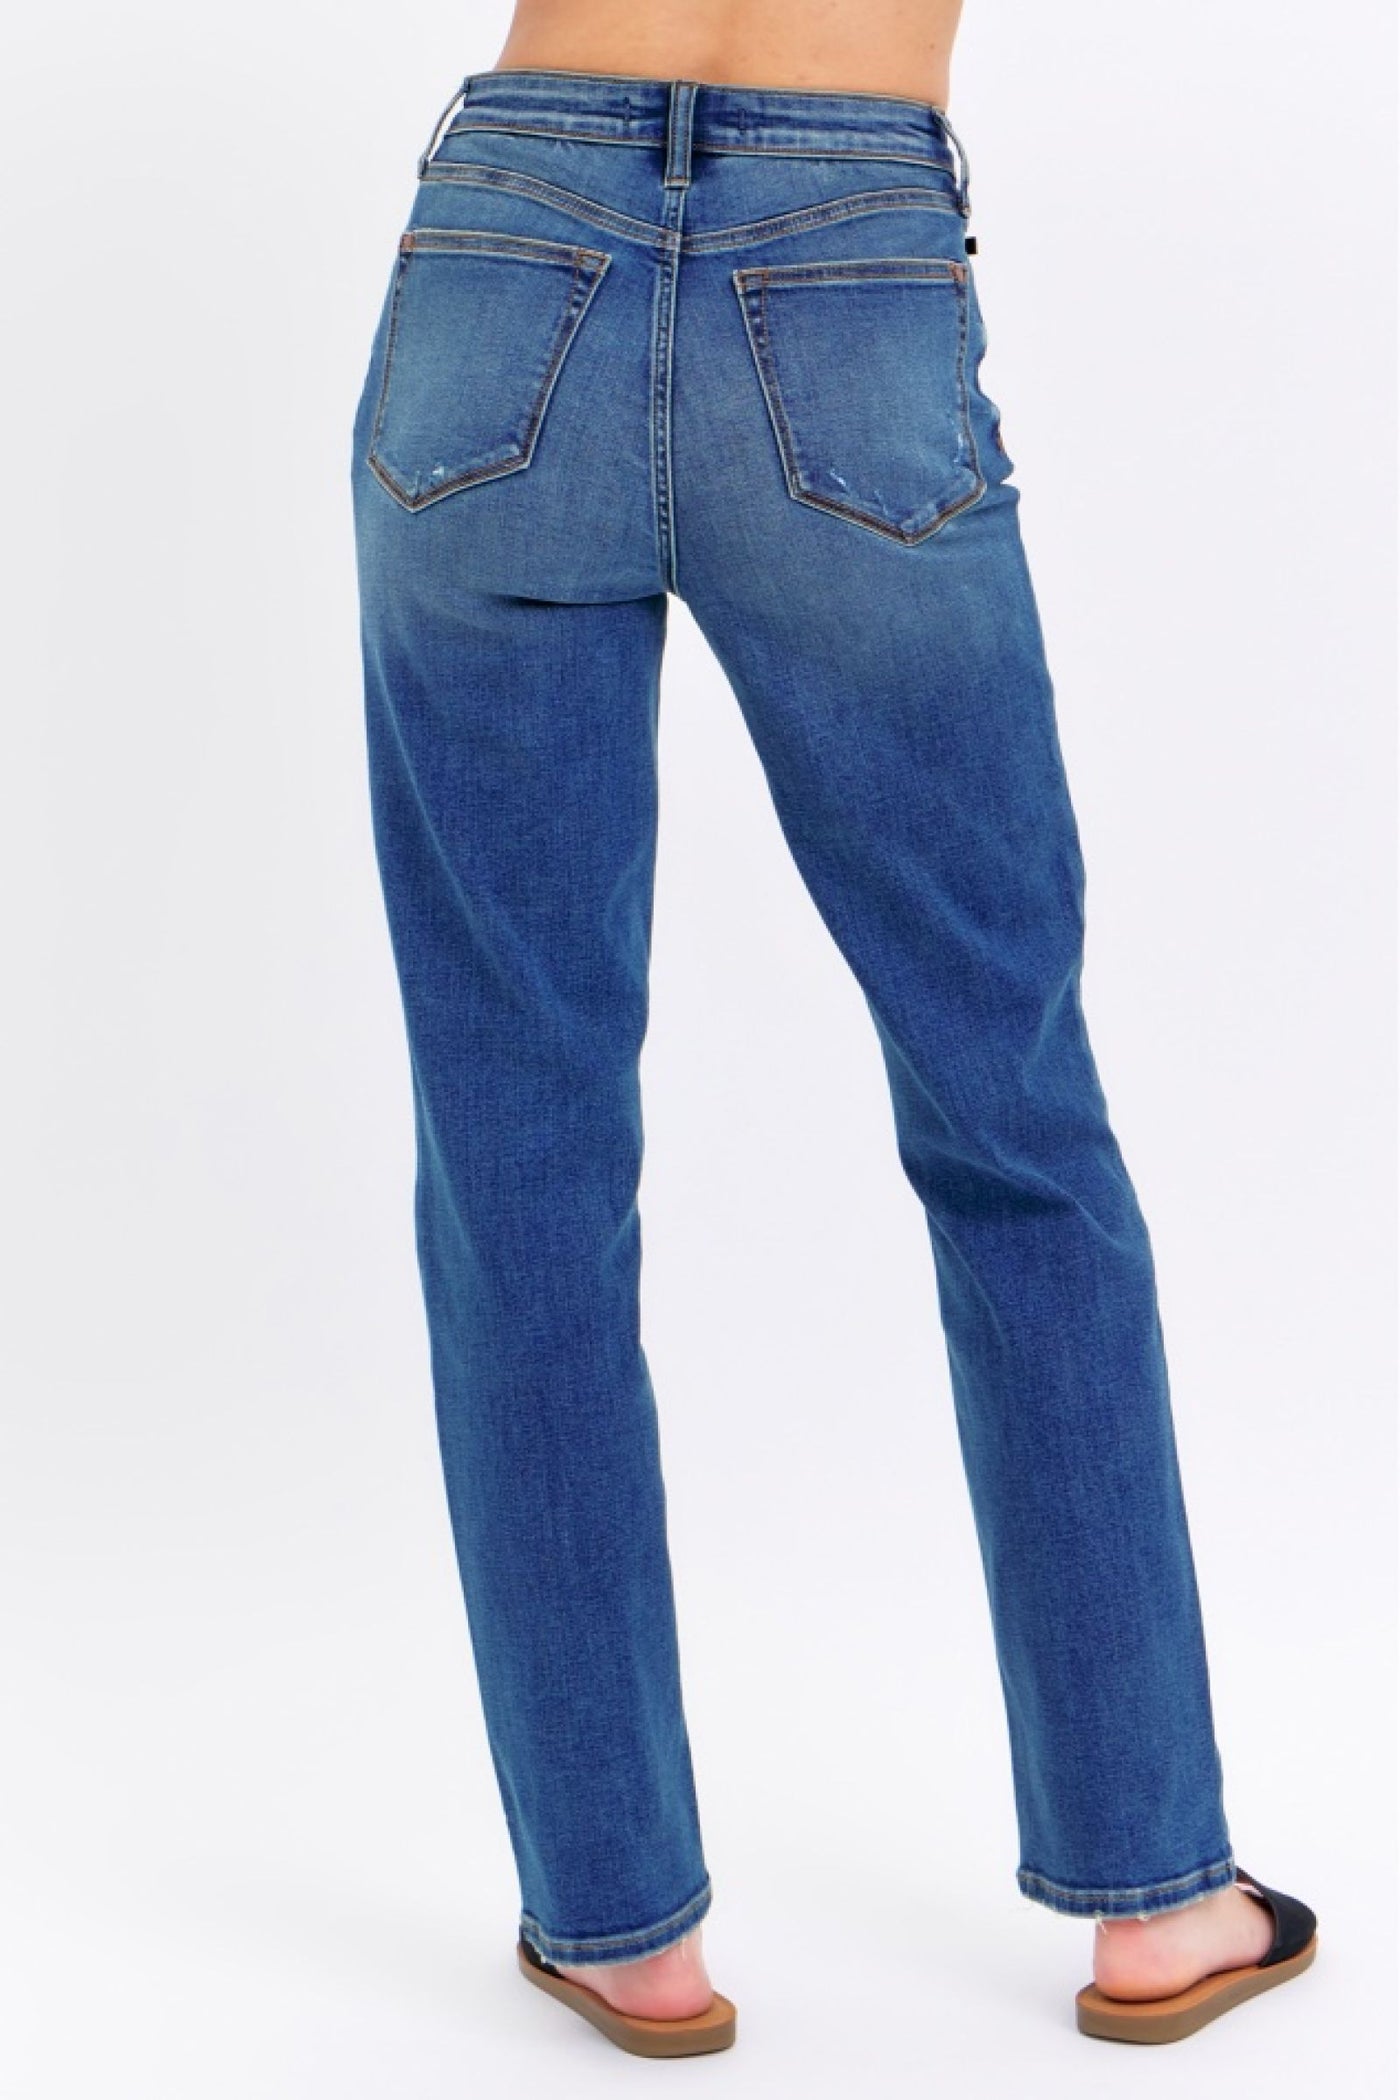 Judy Blue Jeans 8601